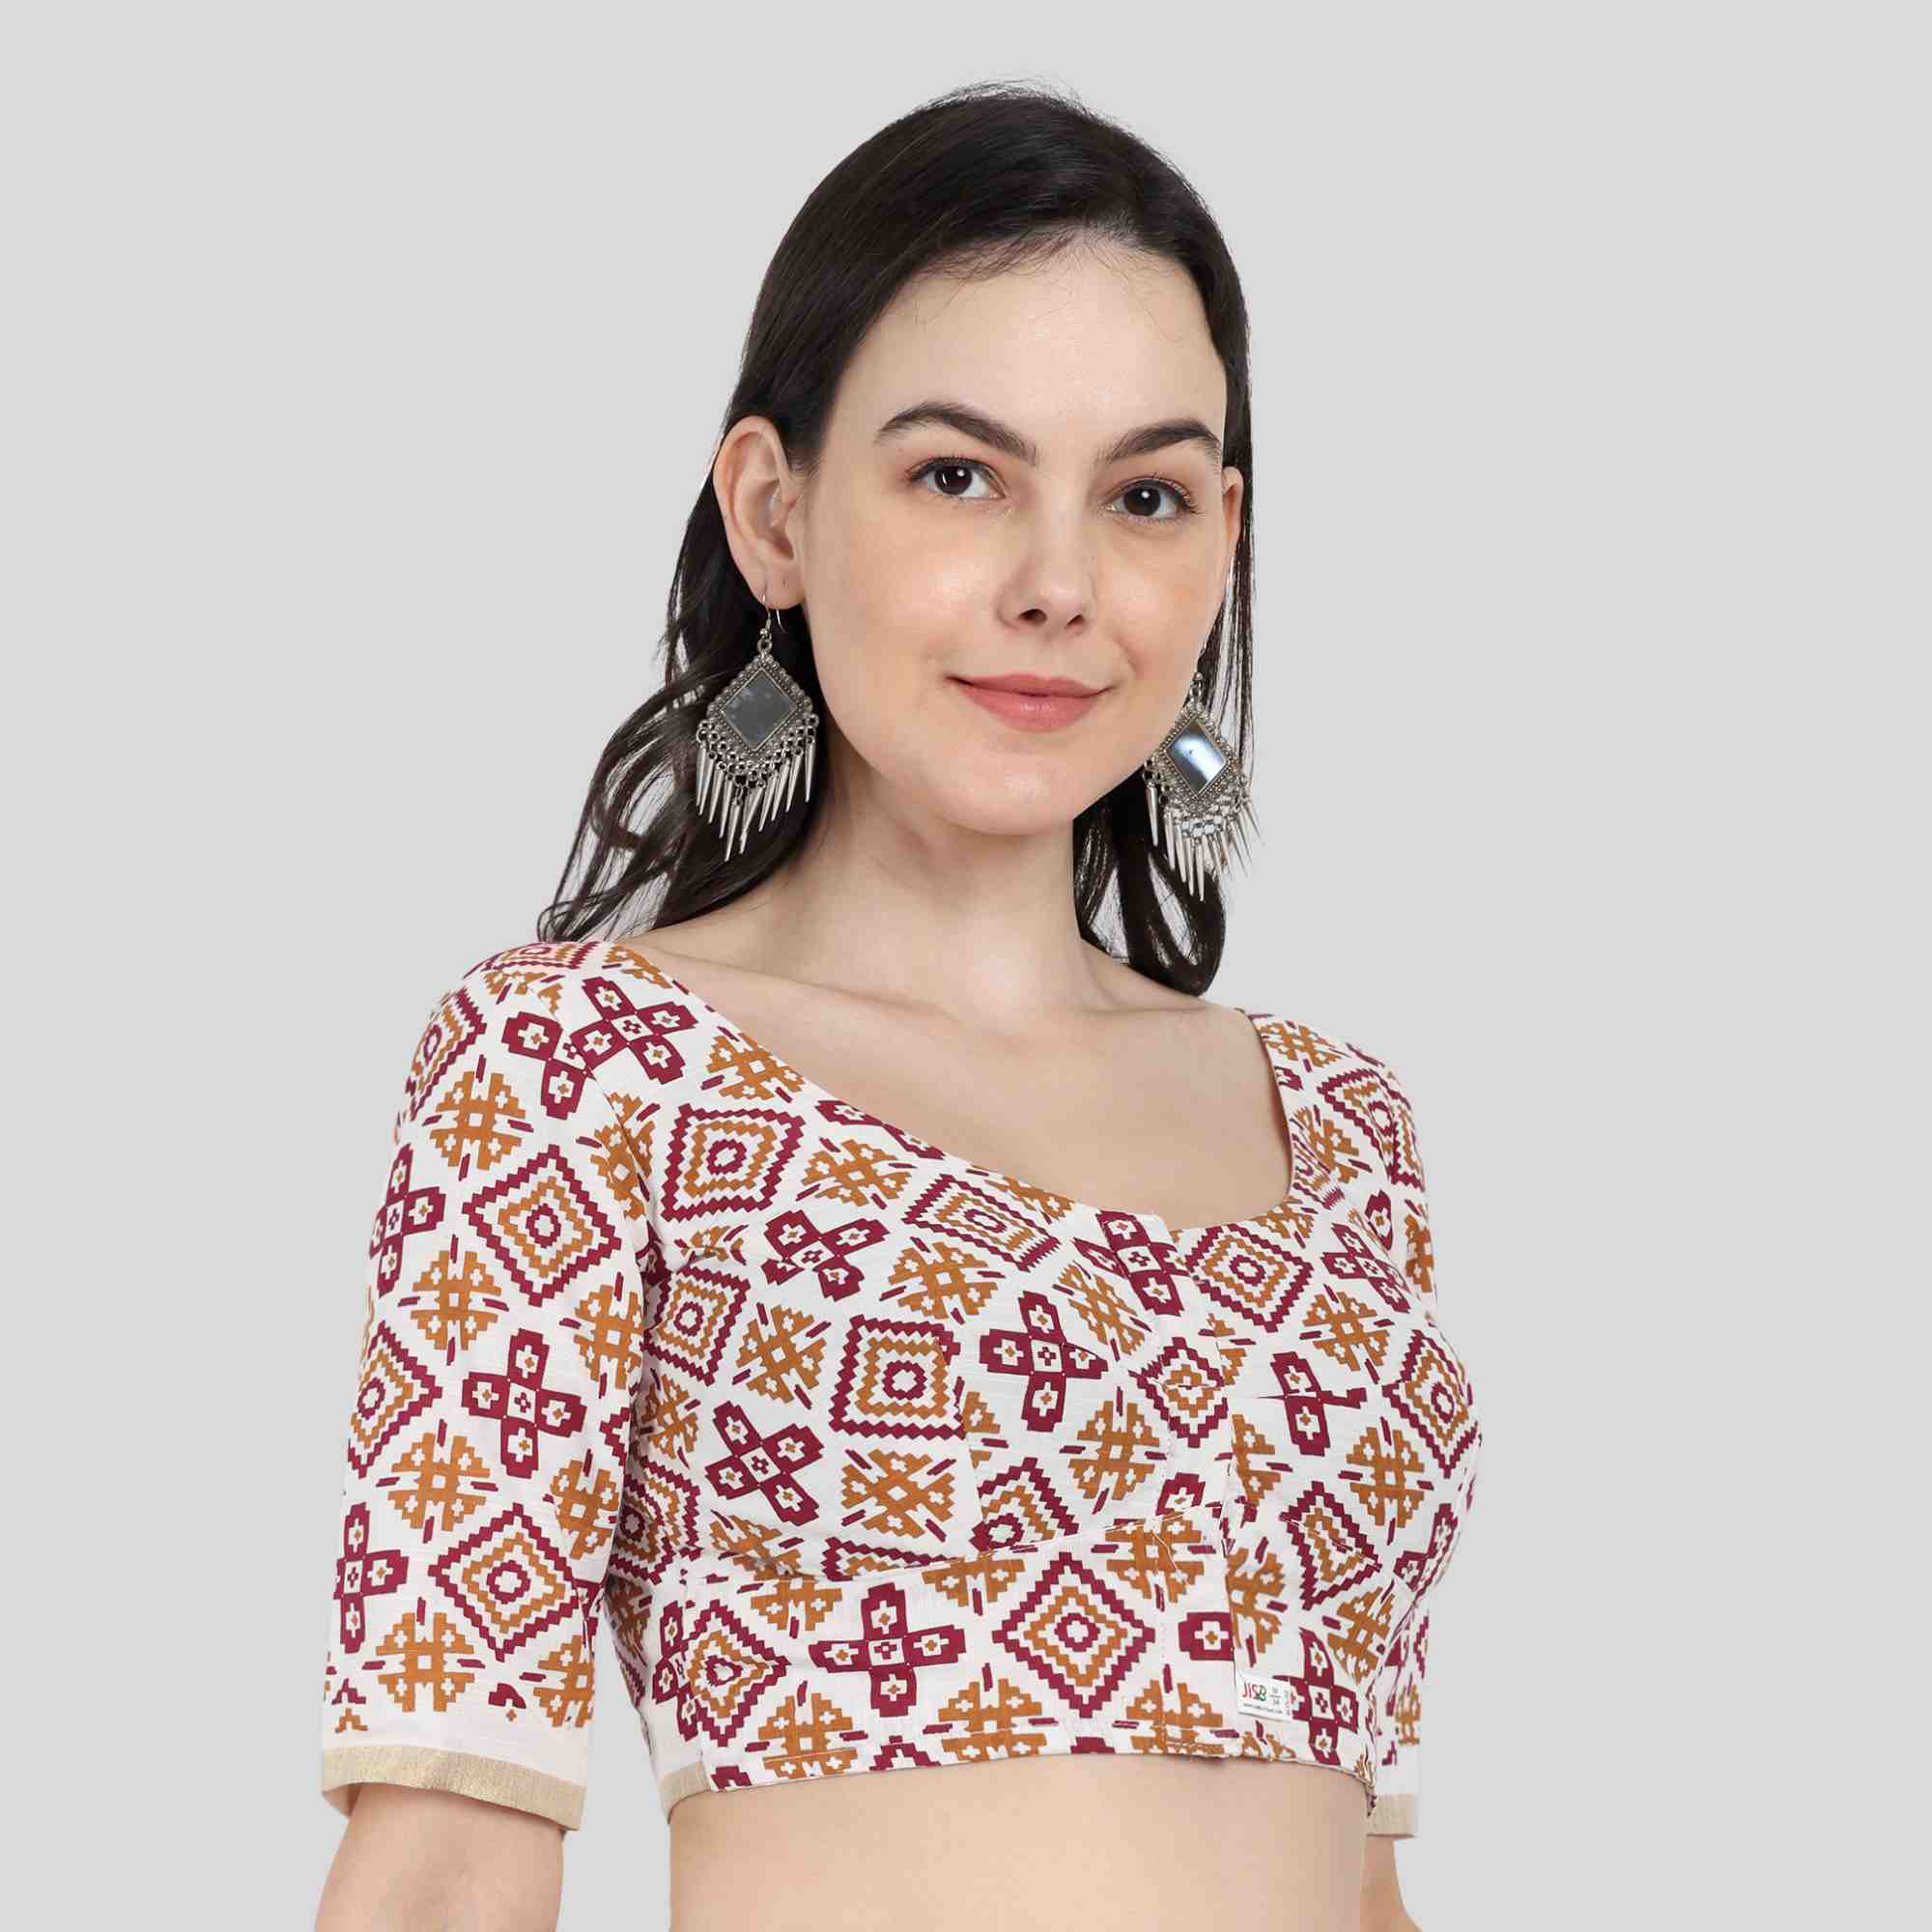 Readymade blouse in Zari border cotton fabric in maroon print